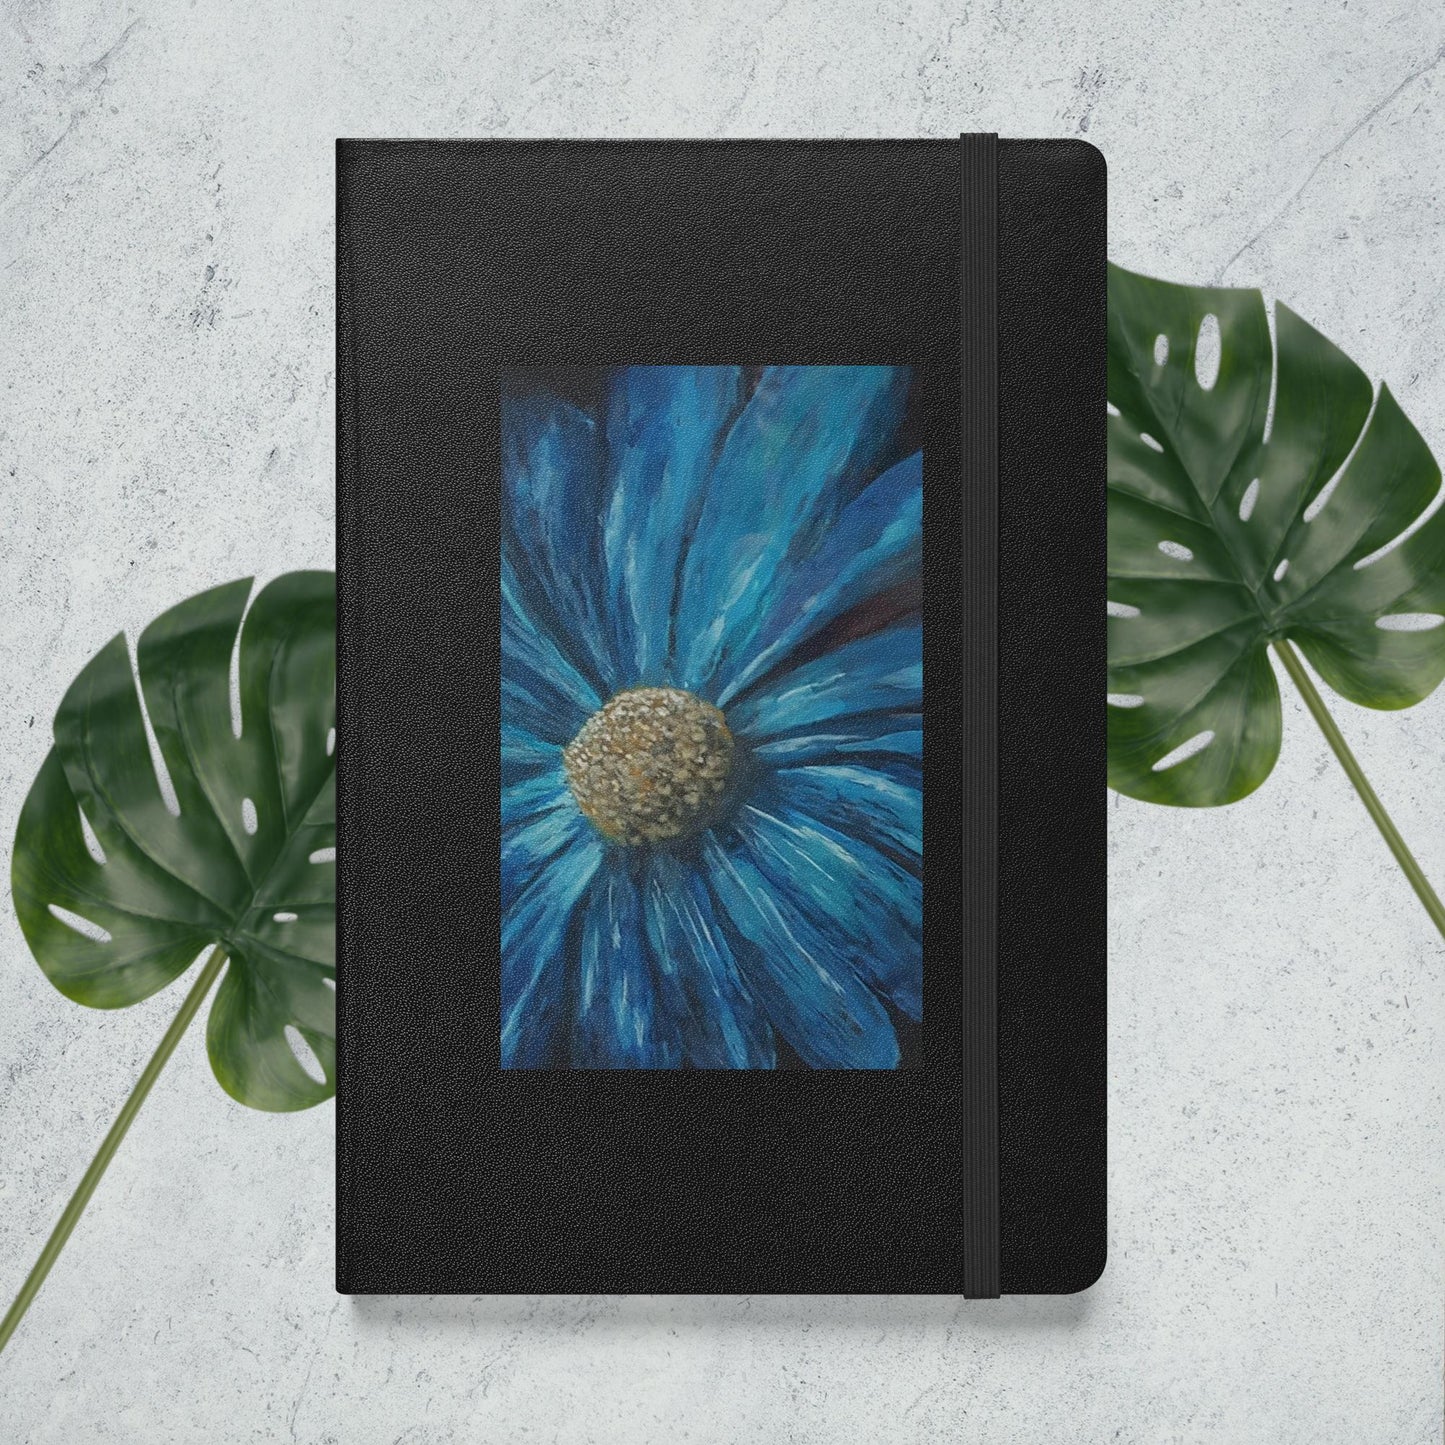 Blue Anemone Hardcover Bound Notebook with Original Art by Lynda Krupa, The Artful Lynk